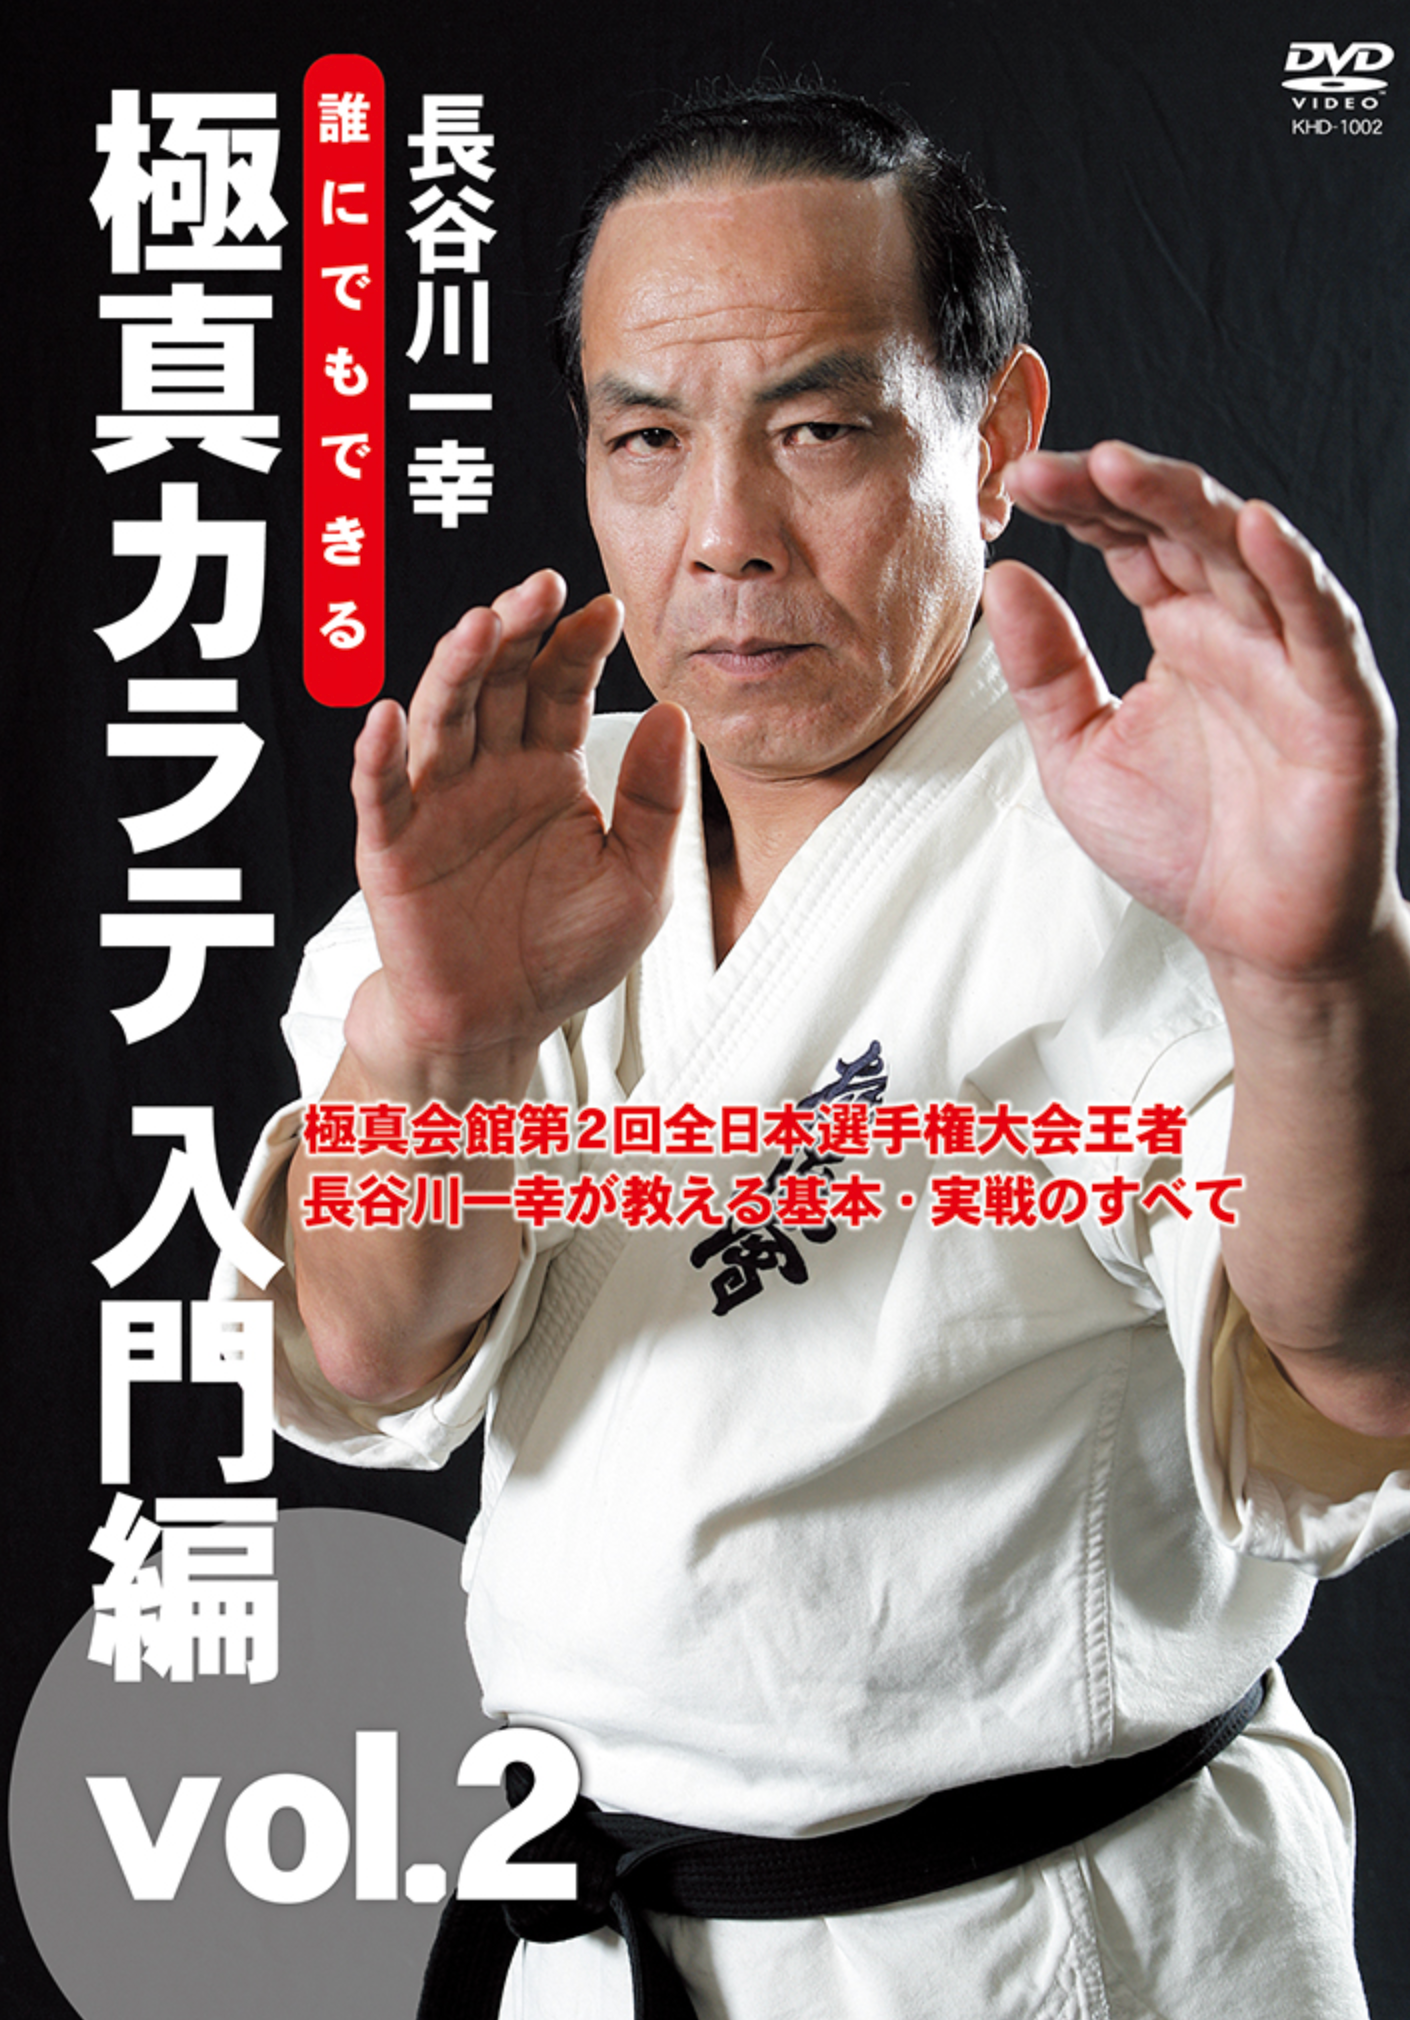 Kyokushin Karate Beginner's Guide DVD Vol 2 by Kazuyuki Hasegawa - Budovideos Inc